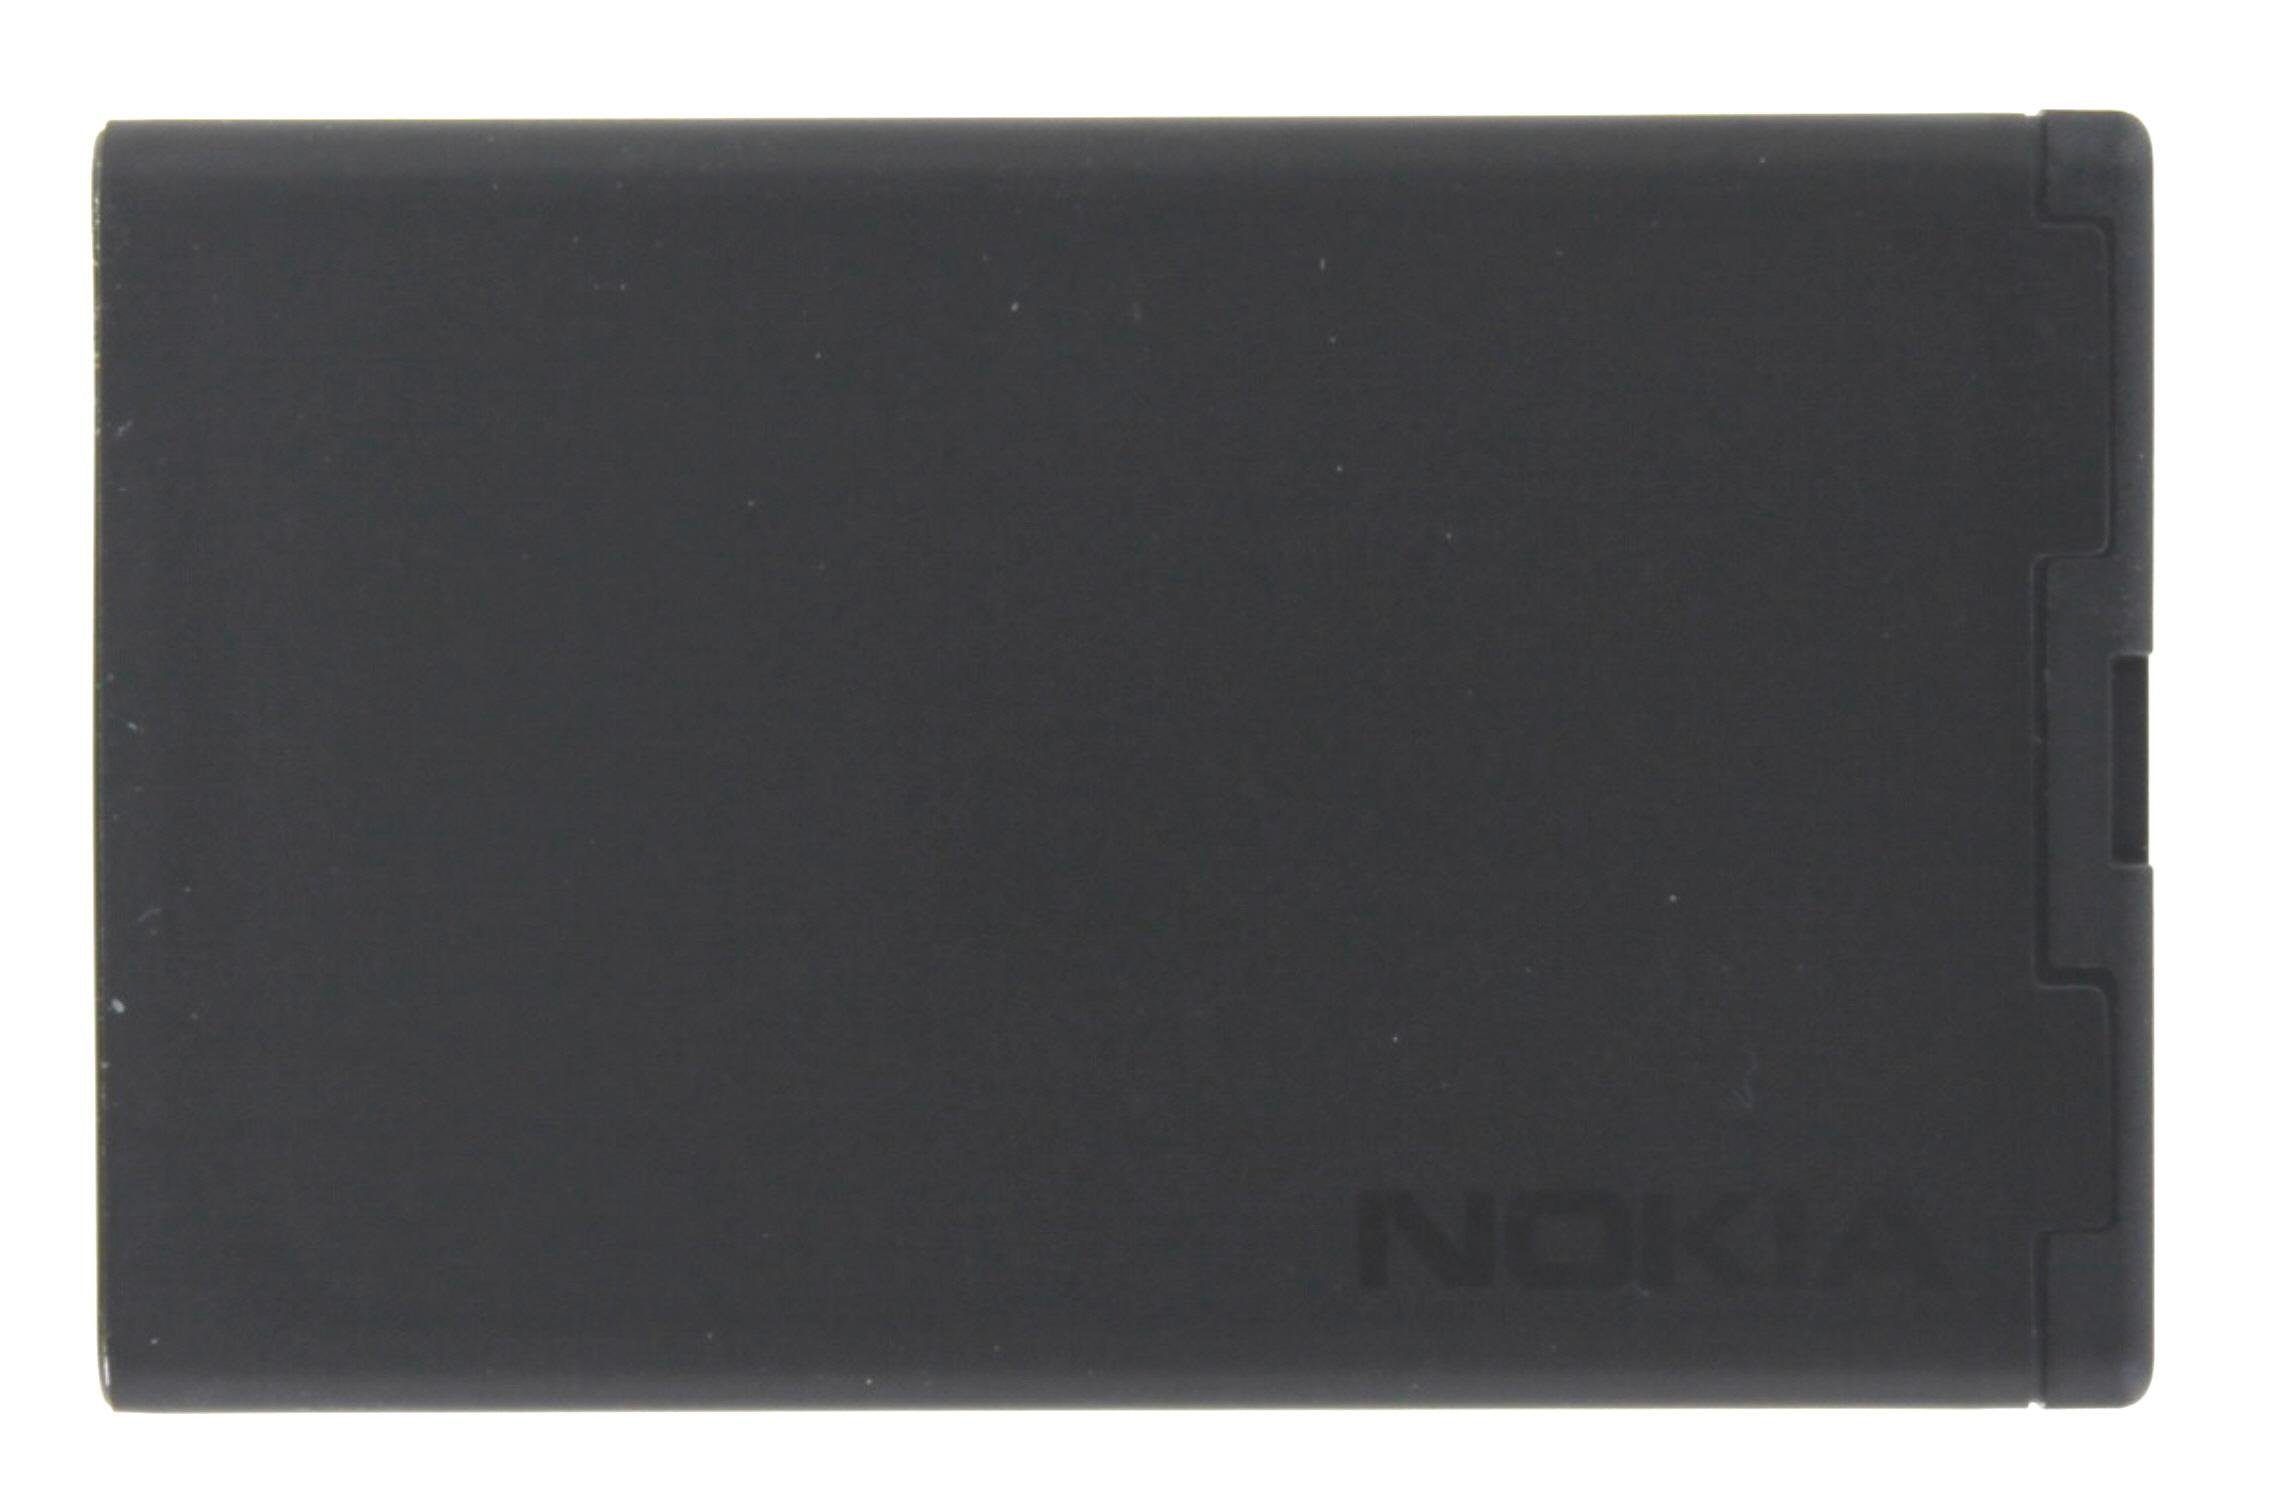 X6-00 mAh Nokia Akkupacks Original Nokia Akku 1430 Akku für